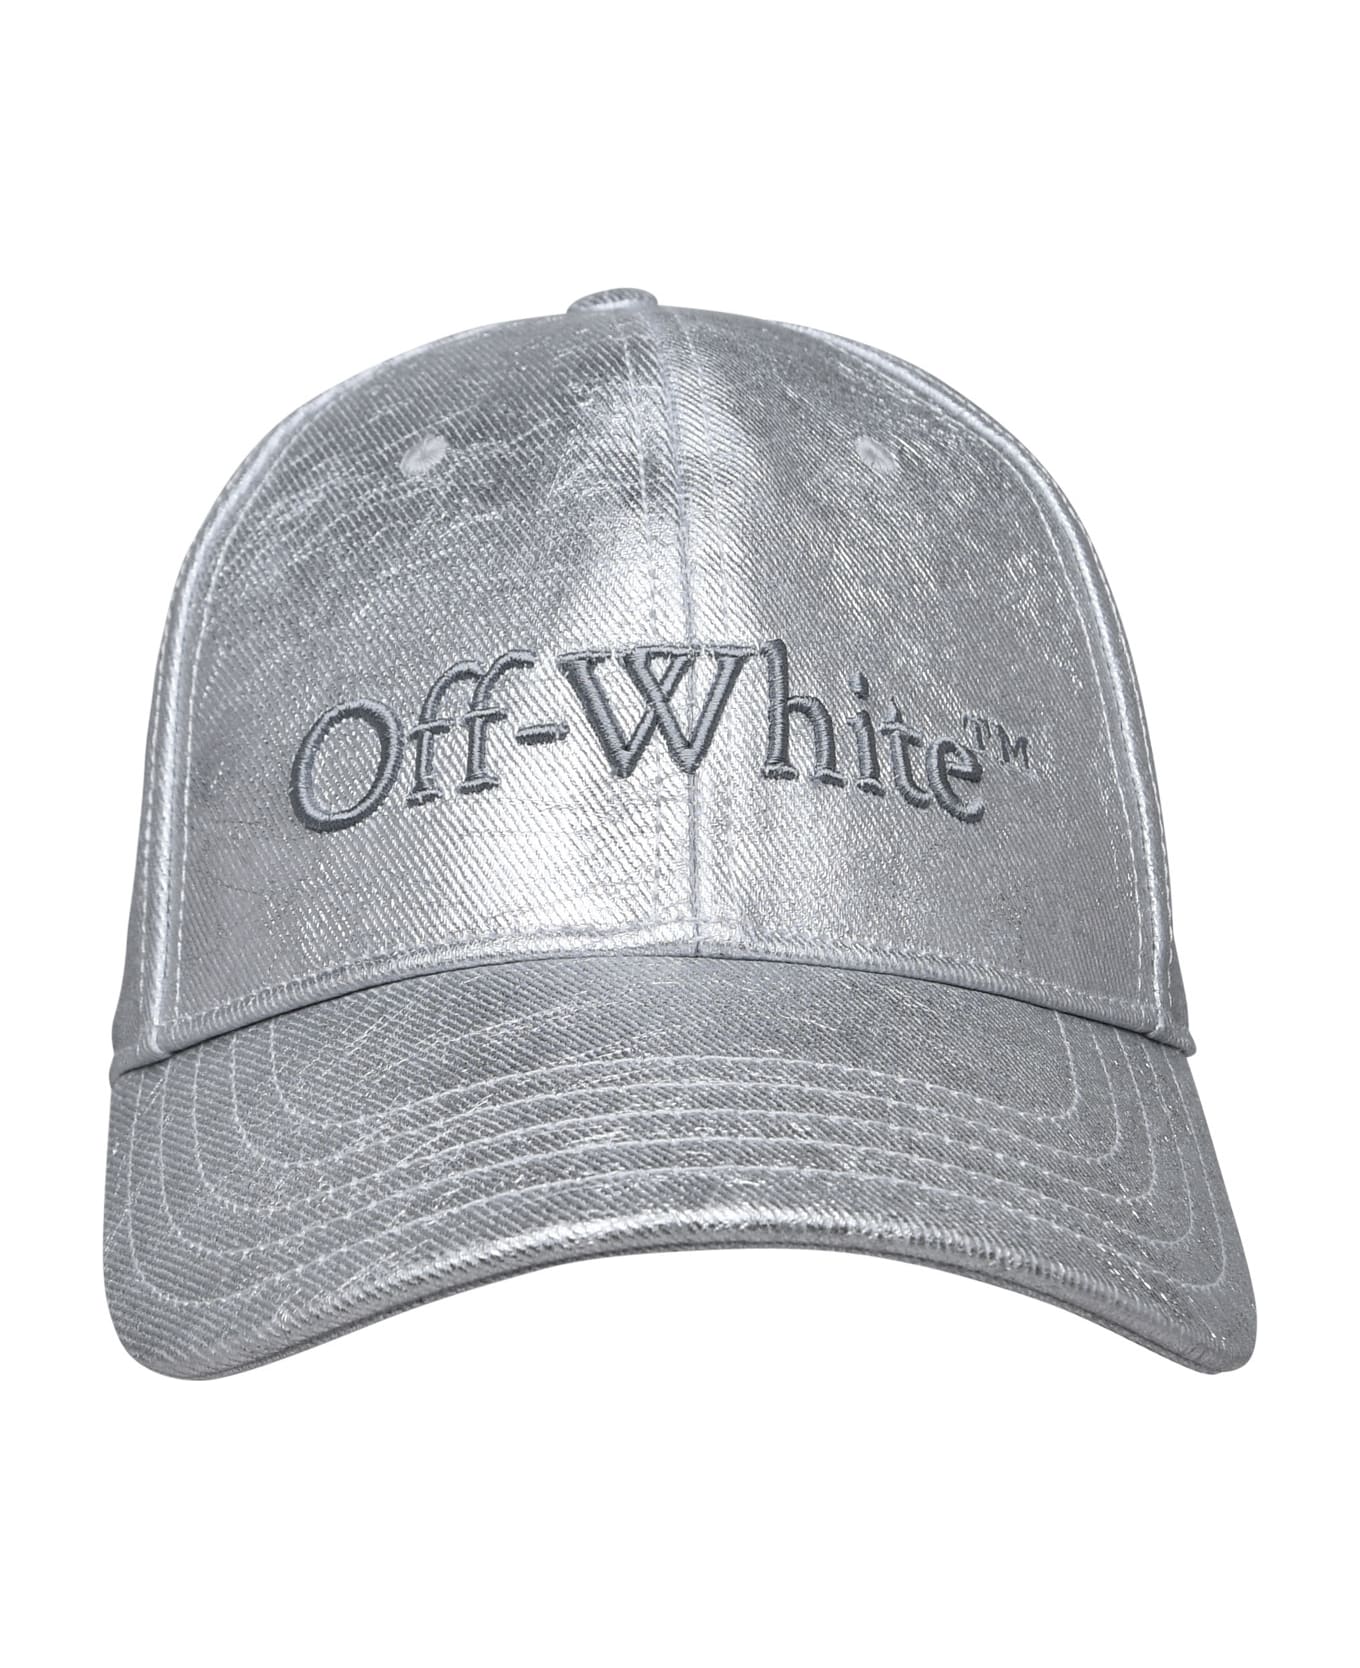 Off-White Baseball Cap - Silver